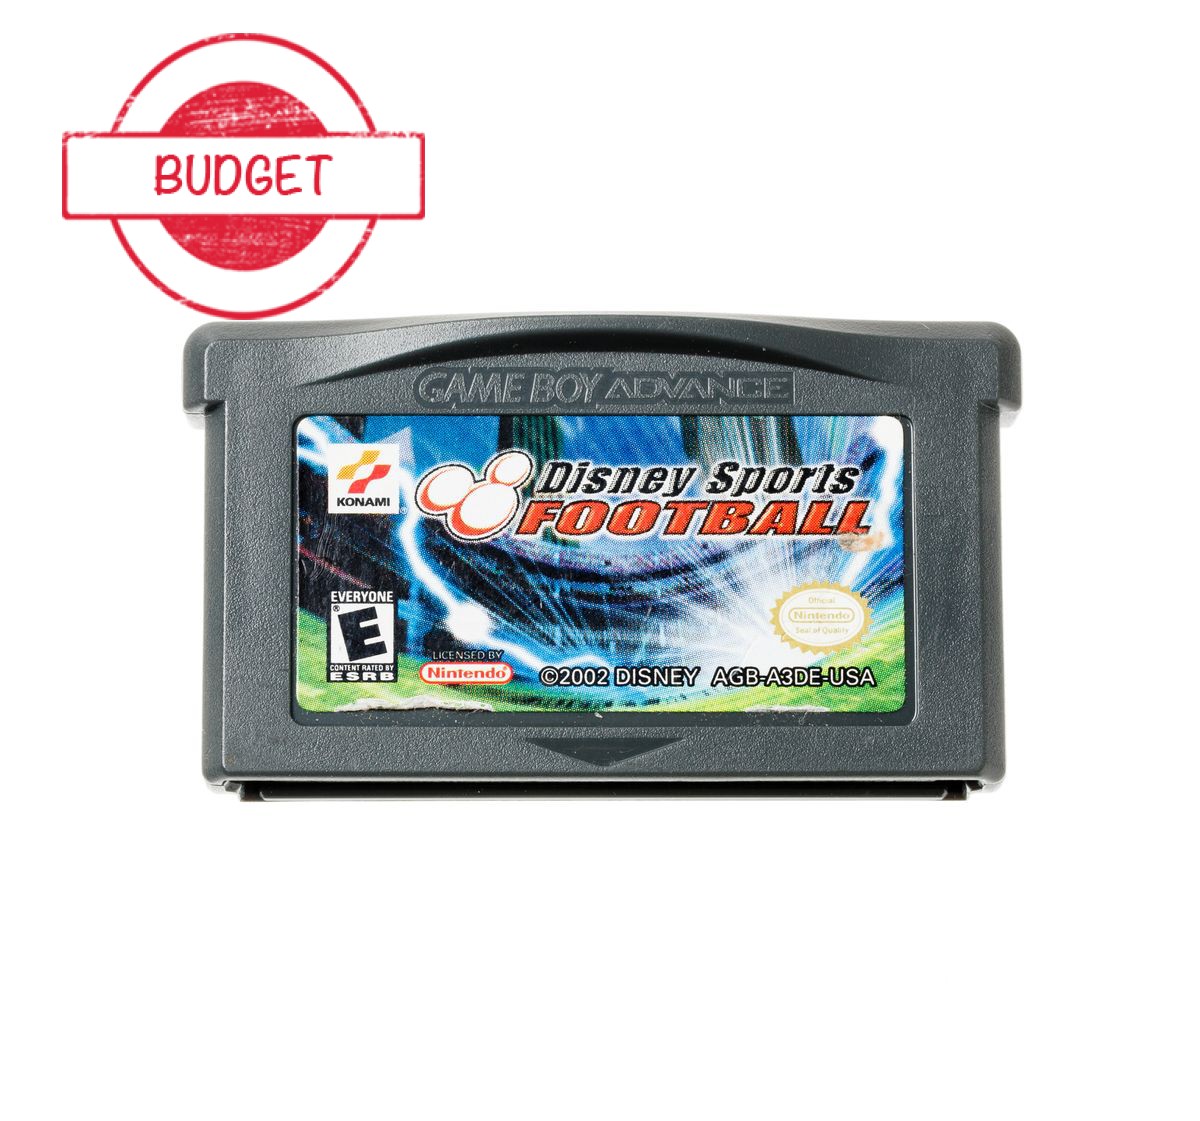 Disney Sports Football - Budget Kopen | Gameboy Advance Games